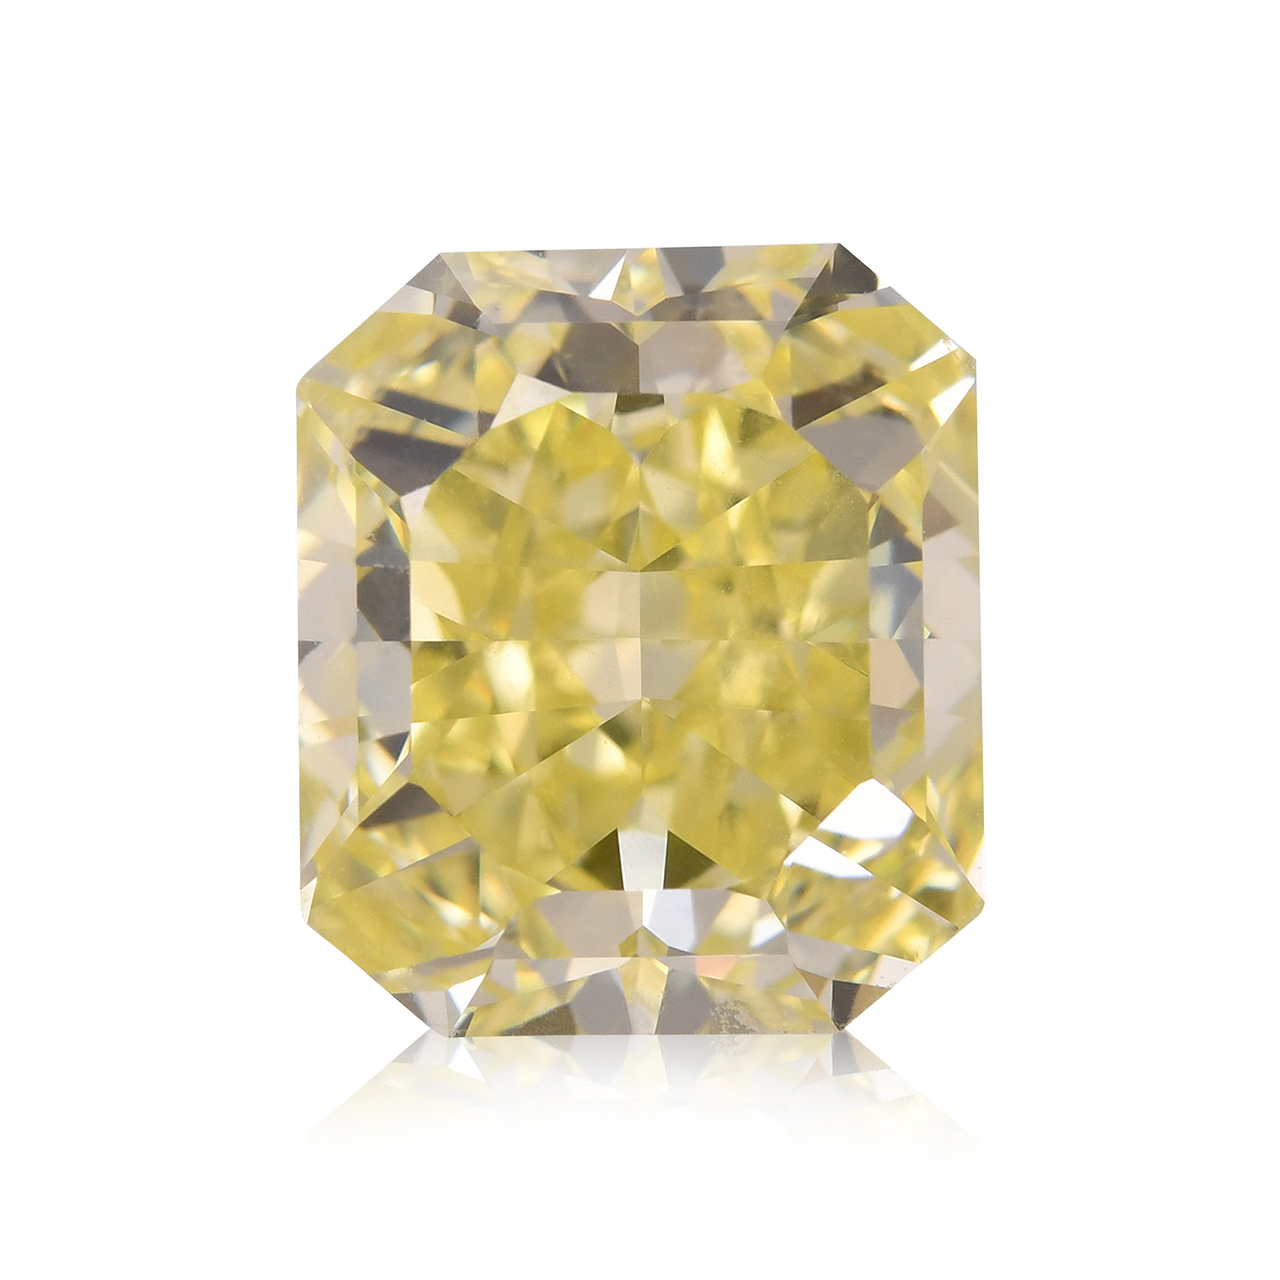 4.11 carat, Fancy Intense Yellow Diamond, Radiant Shape, VS2 Clarity, GIA,  SKU 590555